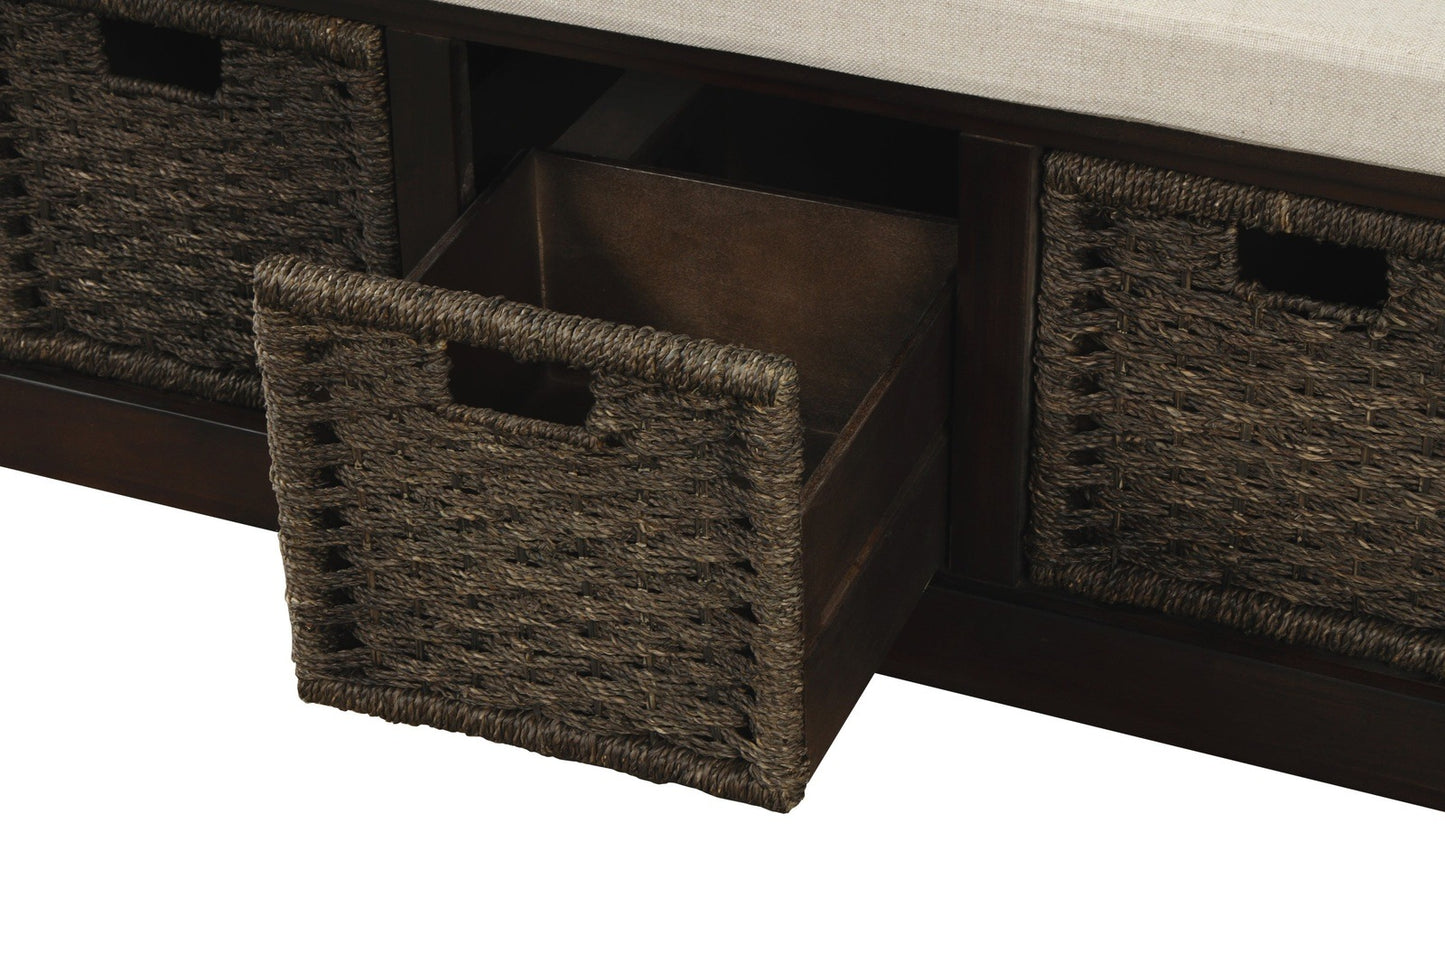 TREXM Rustic Storage Bench with 3 Removable Classic Rattan Basket - Espresso